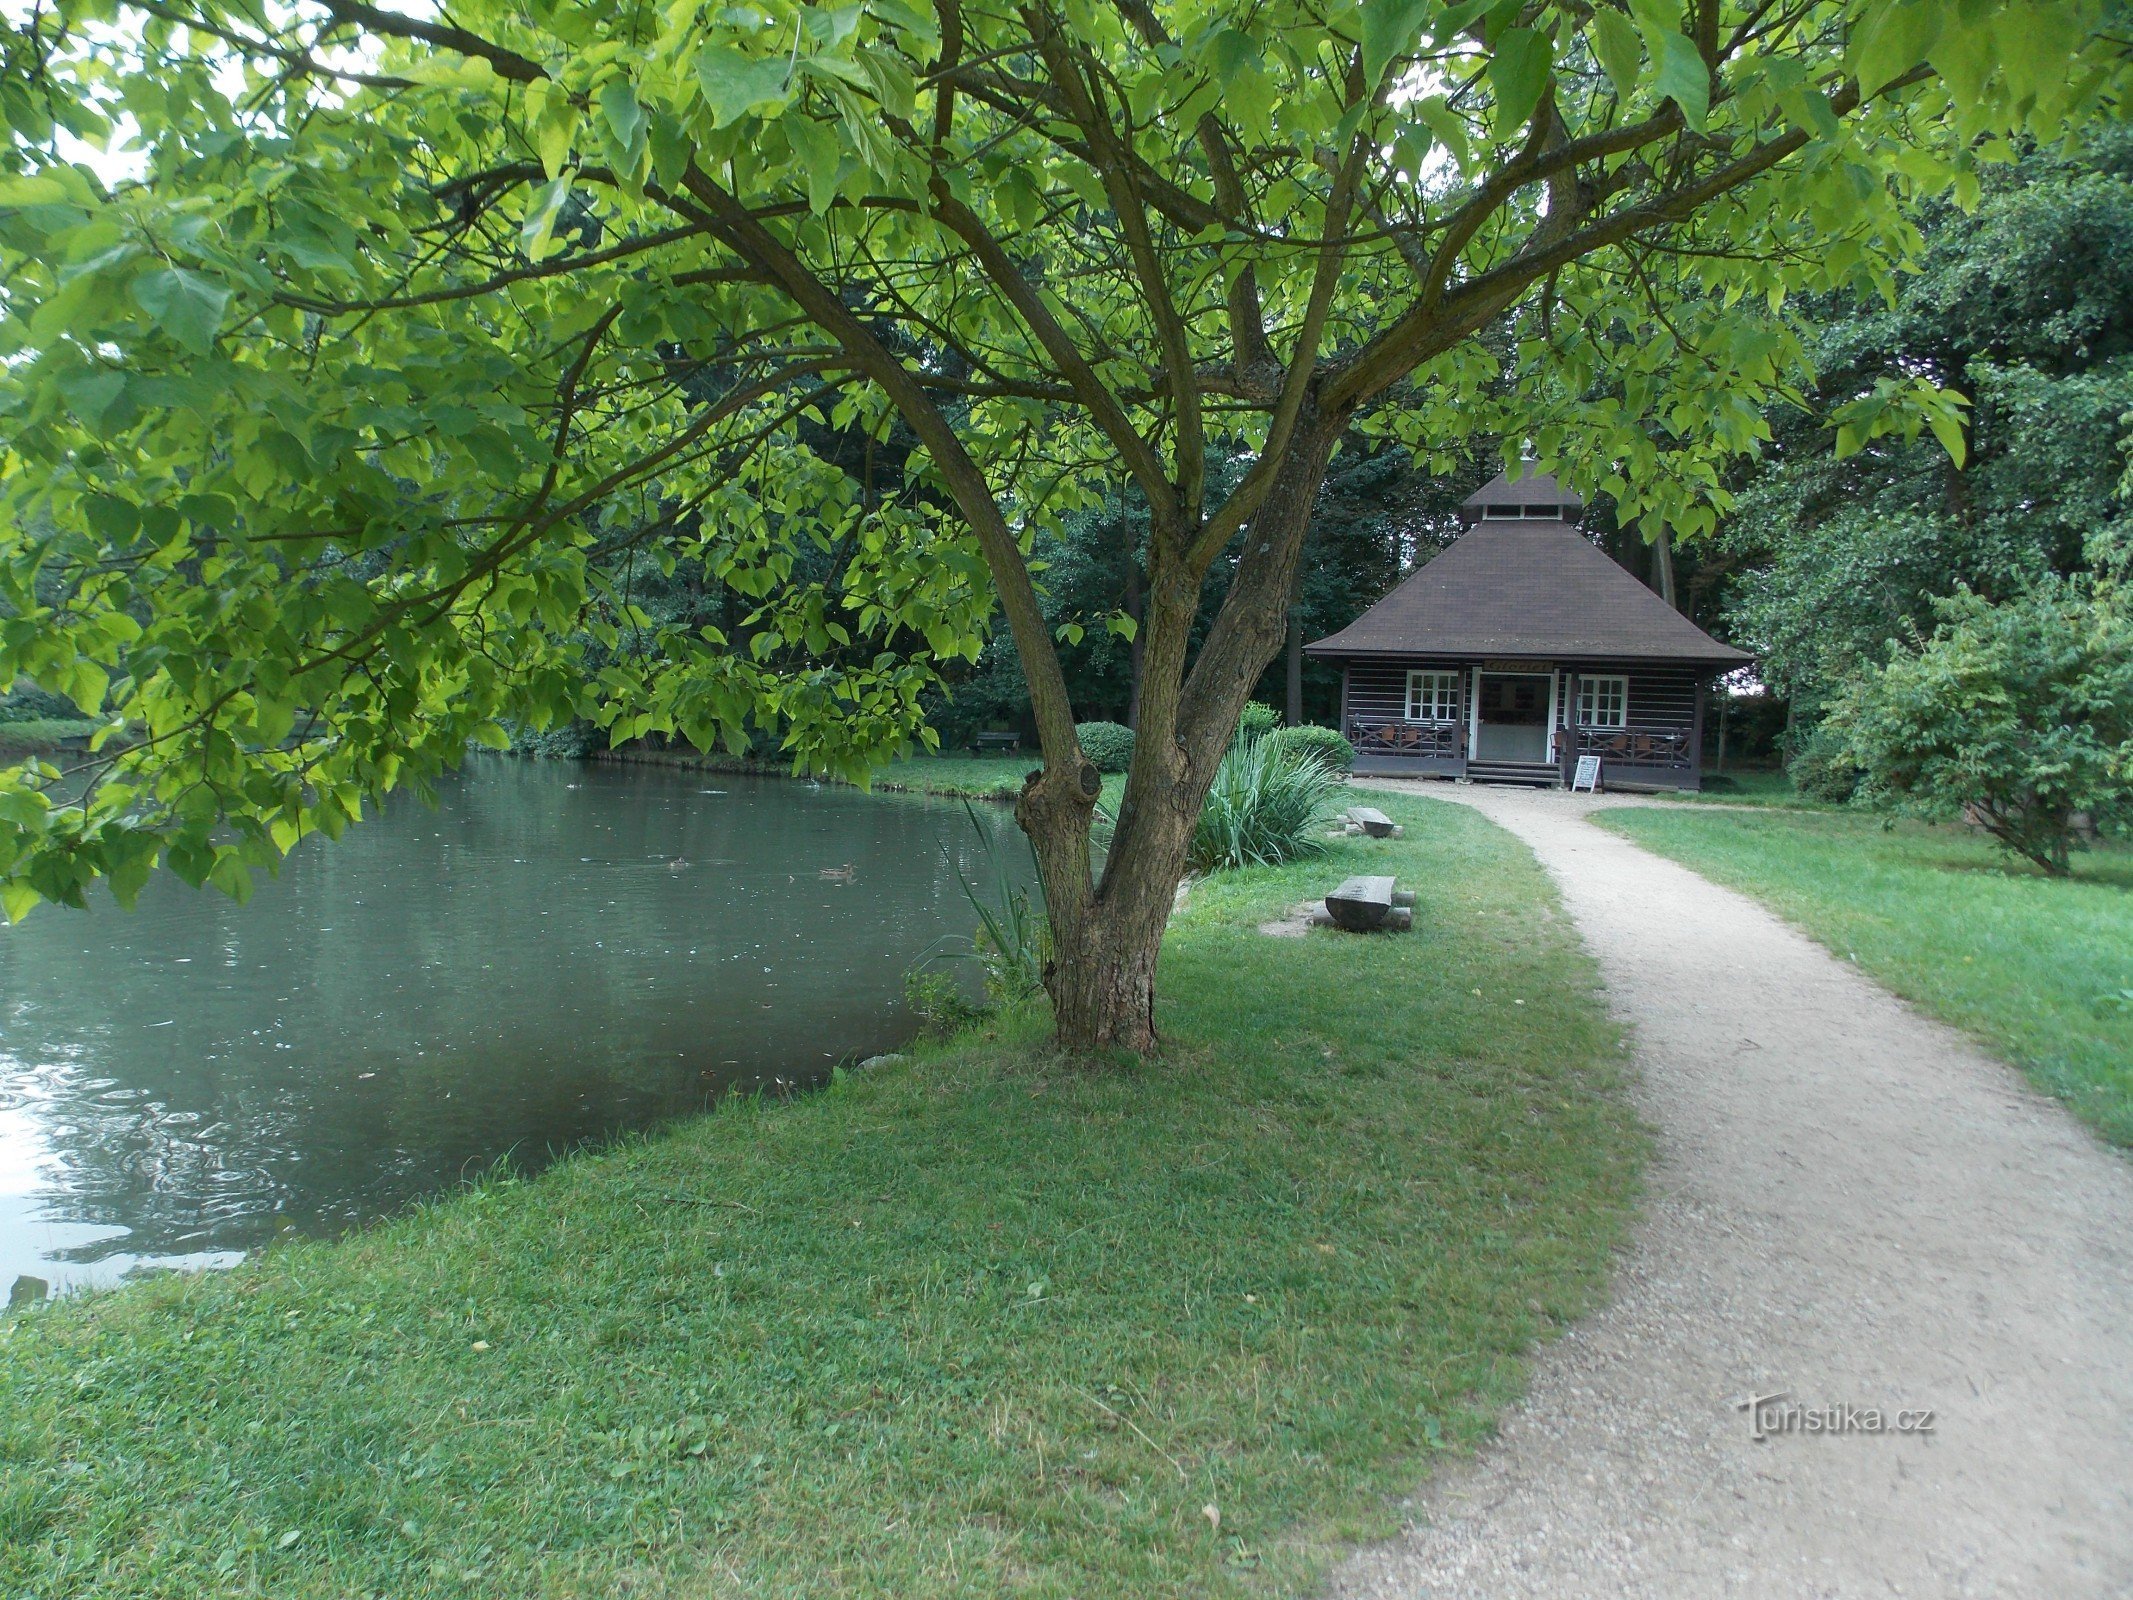 Častolovice slottsträdgård - Gloriet lusthus